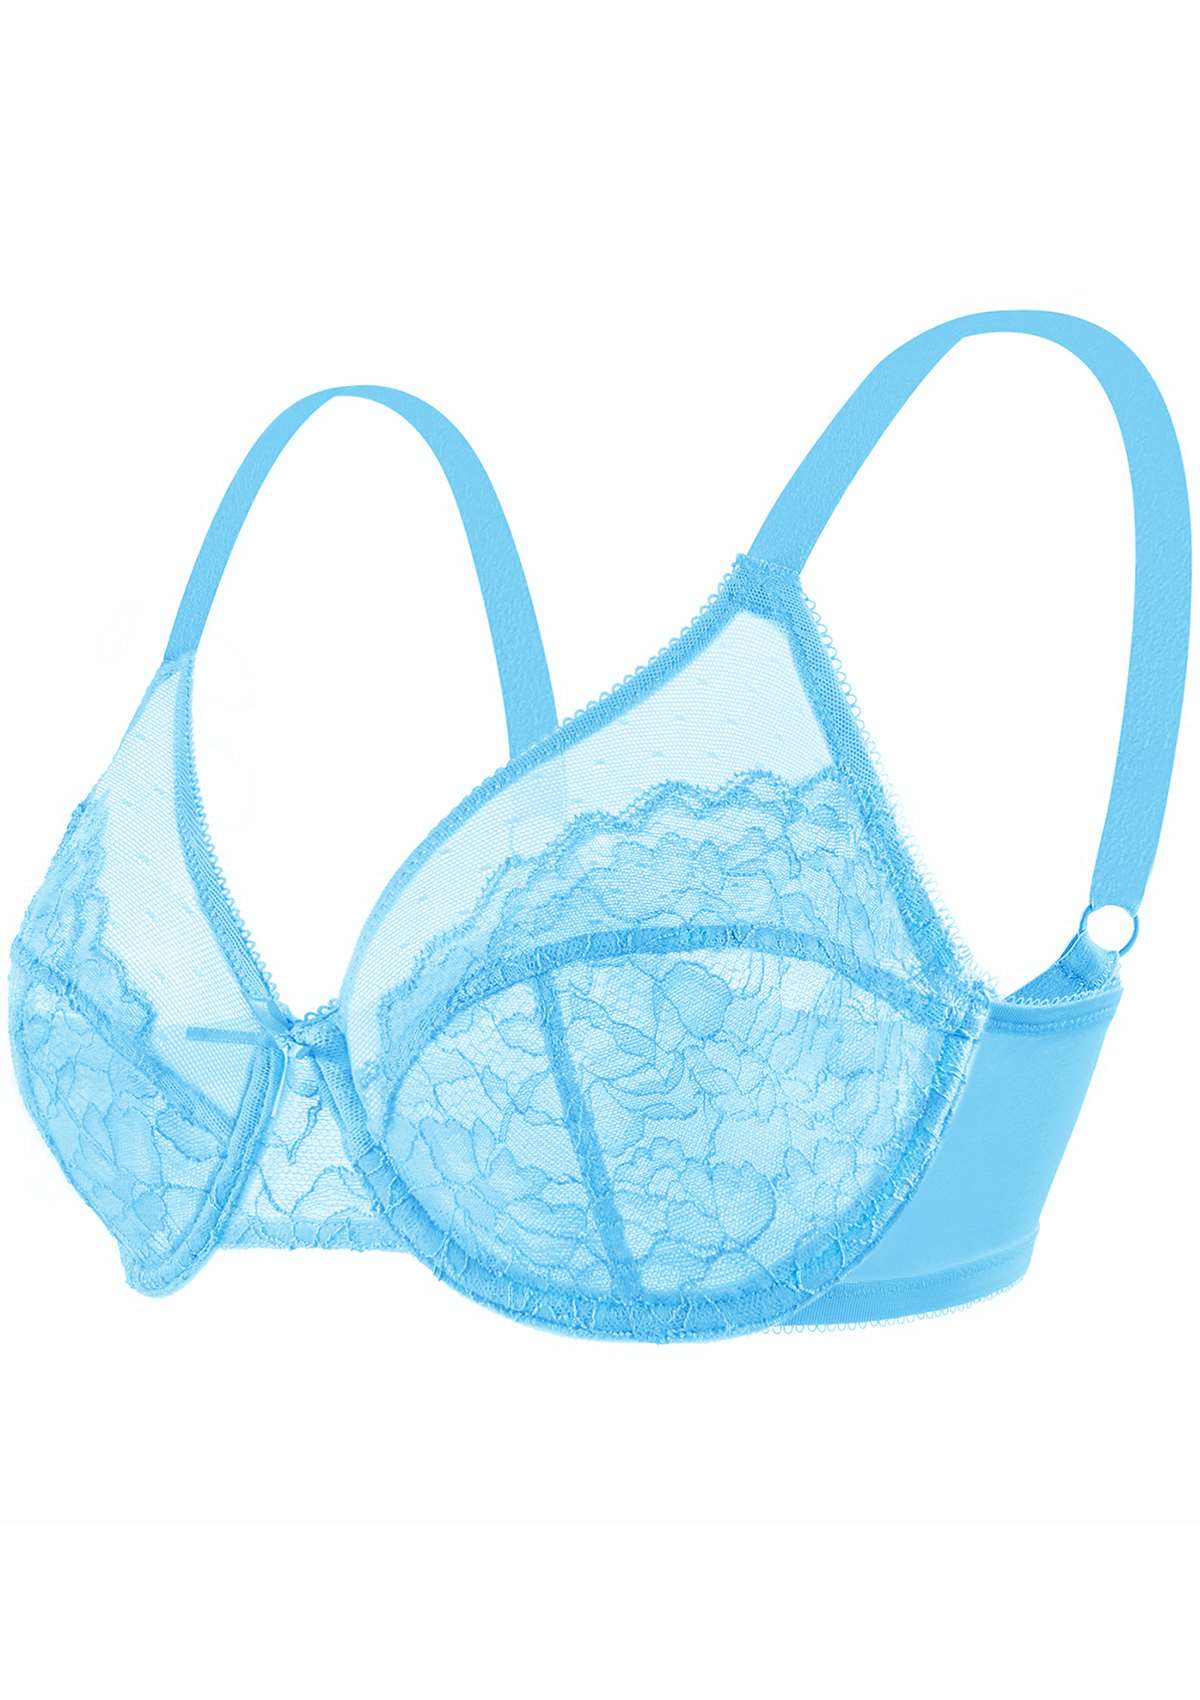 HSIA Enchante Minimizer Lace Bra: Full Support For Heavy Breasts - Capri Blue / 46 / D